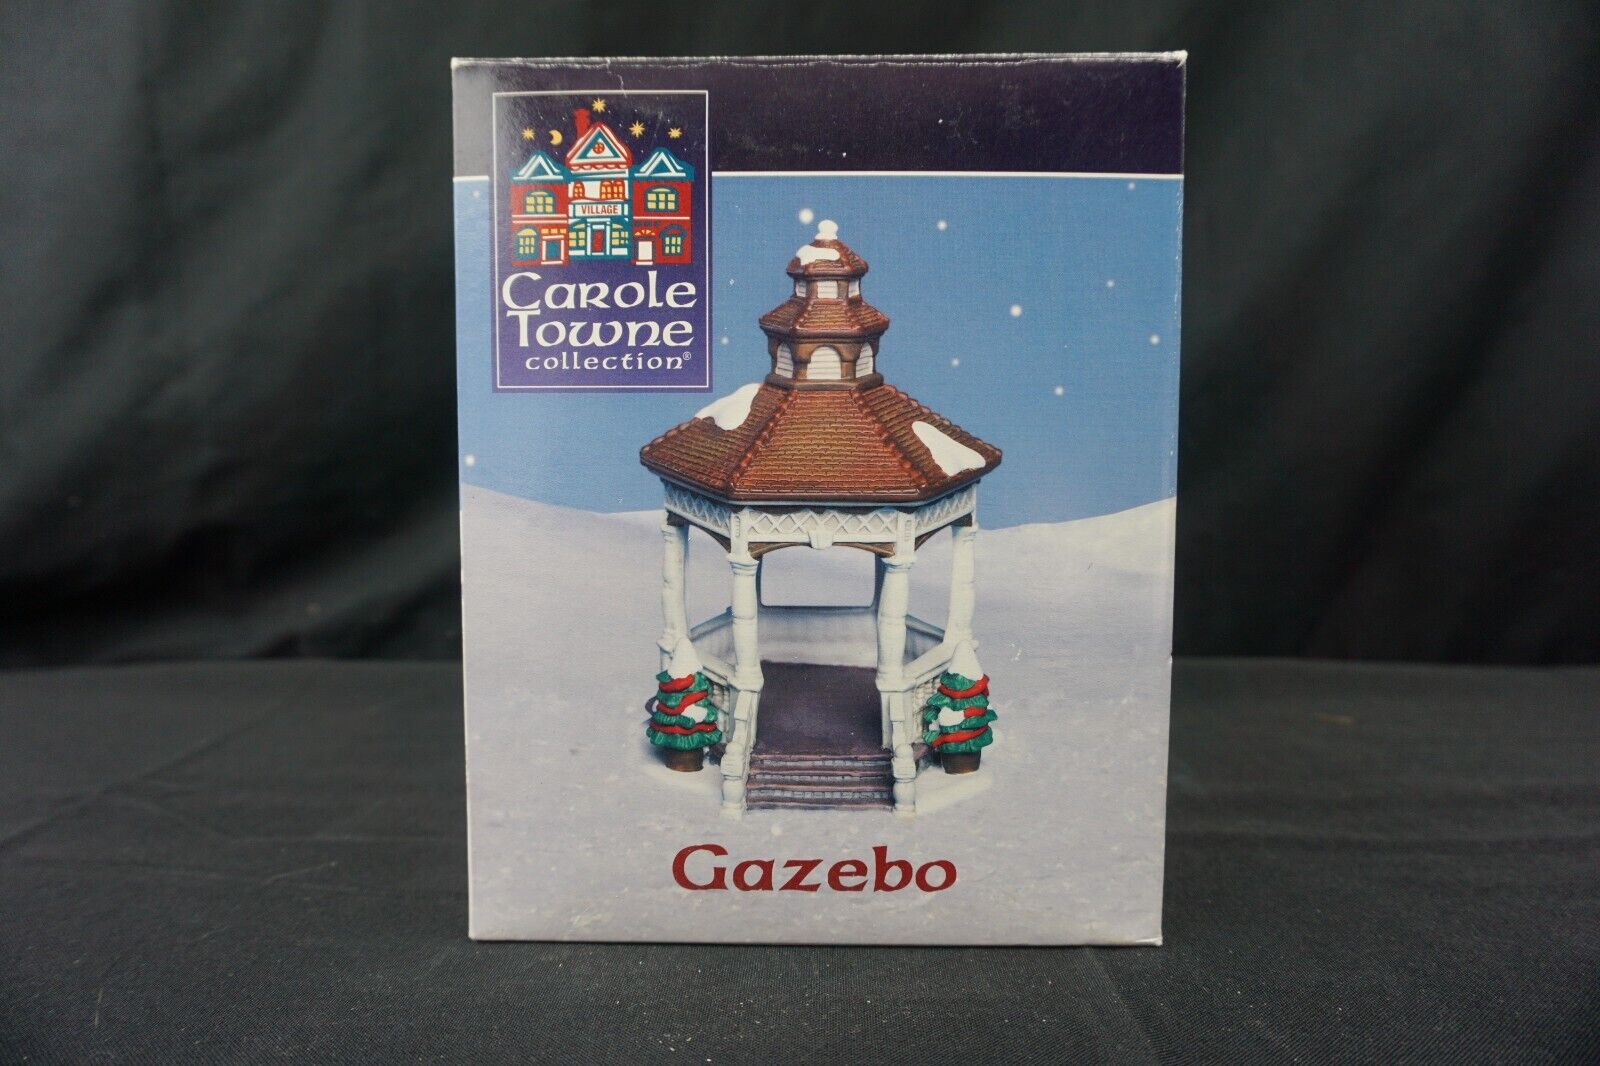 LEMAX Carole Towne Collection Gazebo Christmas Village Decoration 512243 NEW